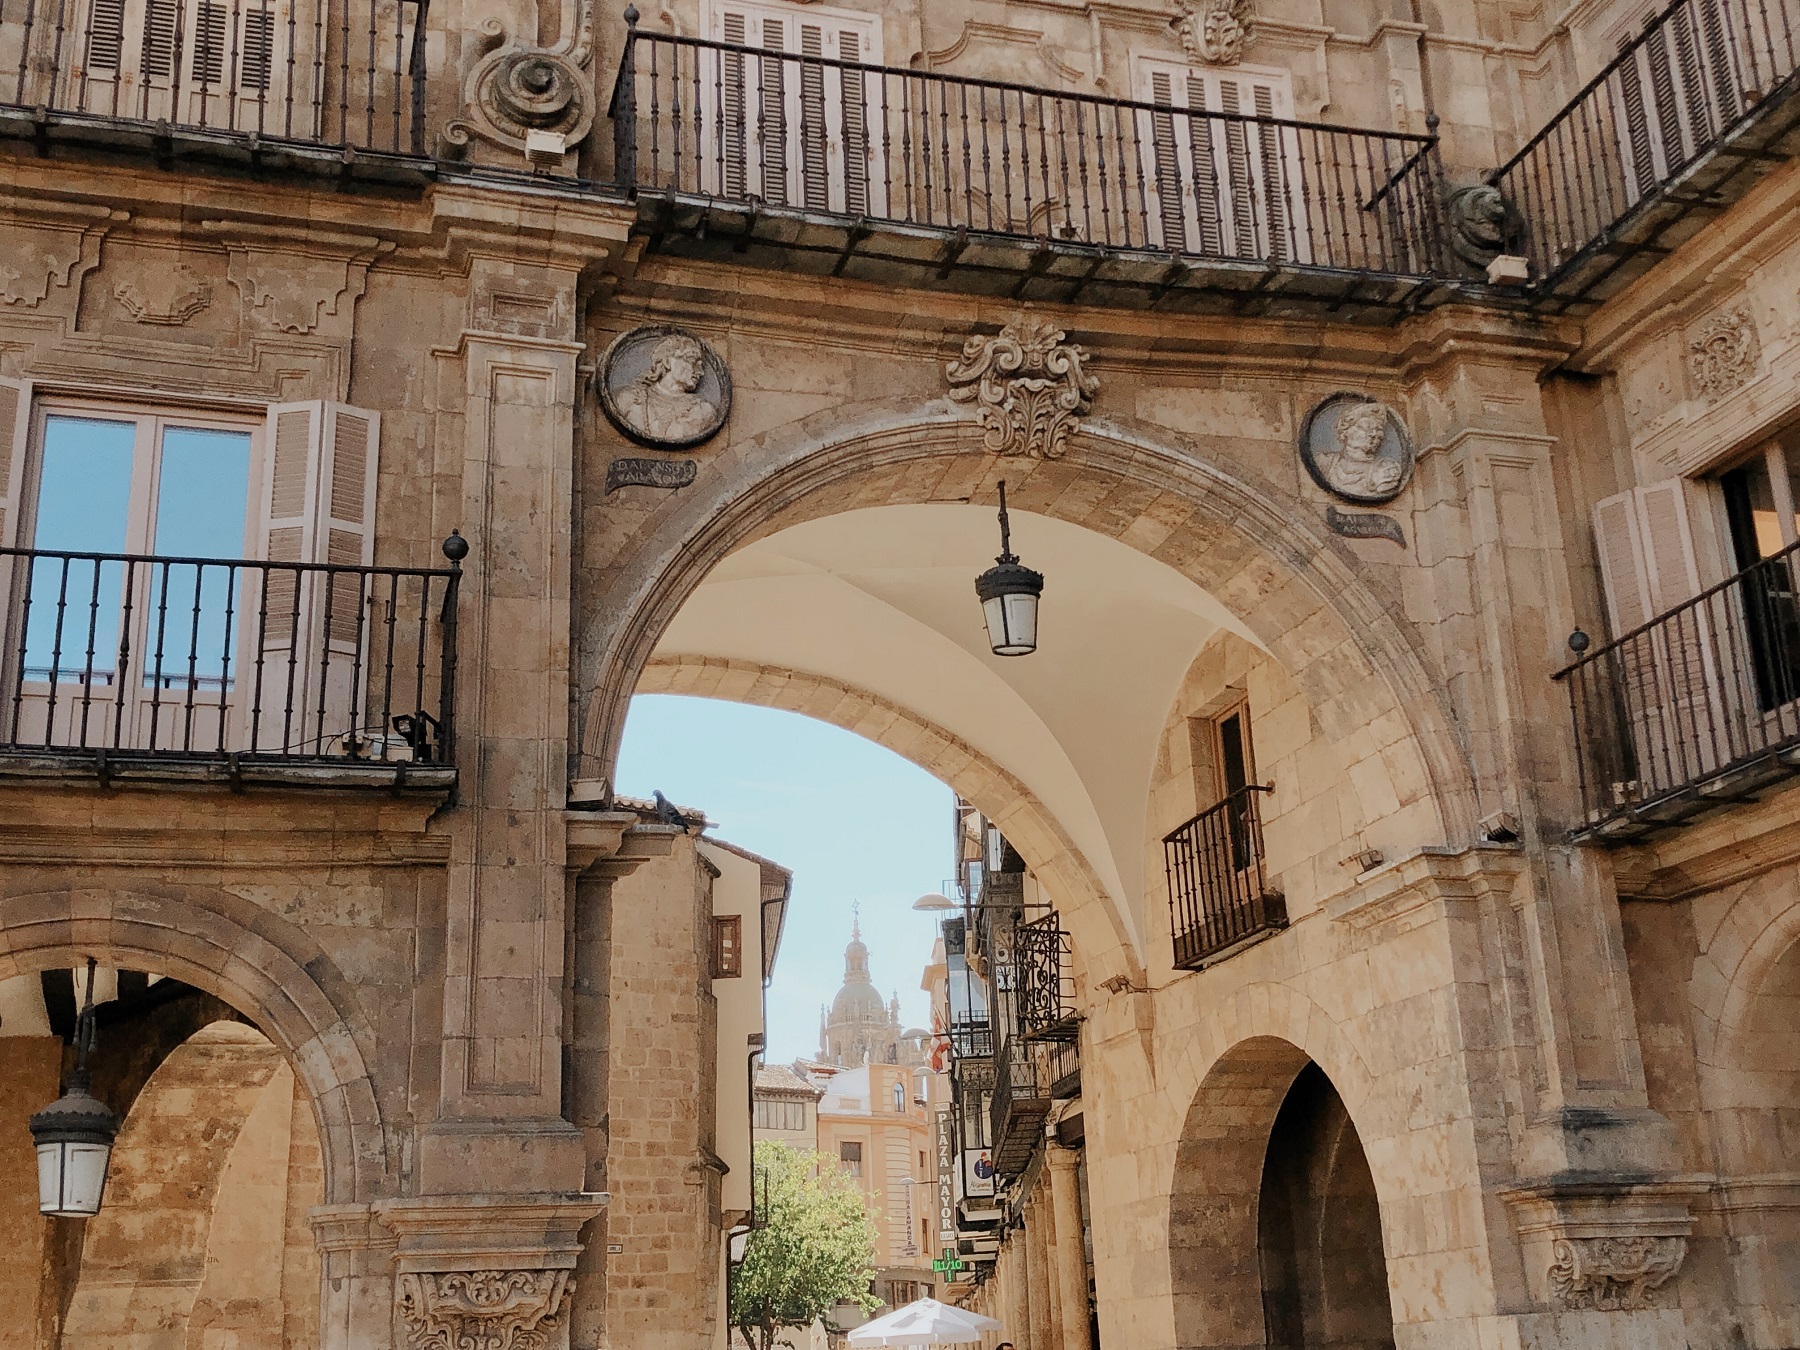 Salamanca, Spanien